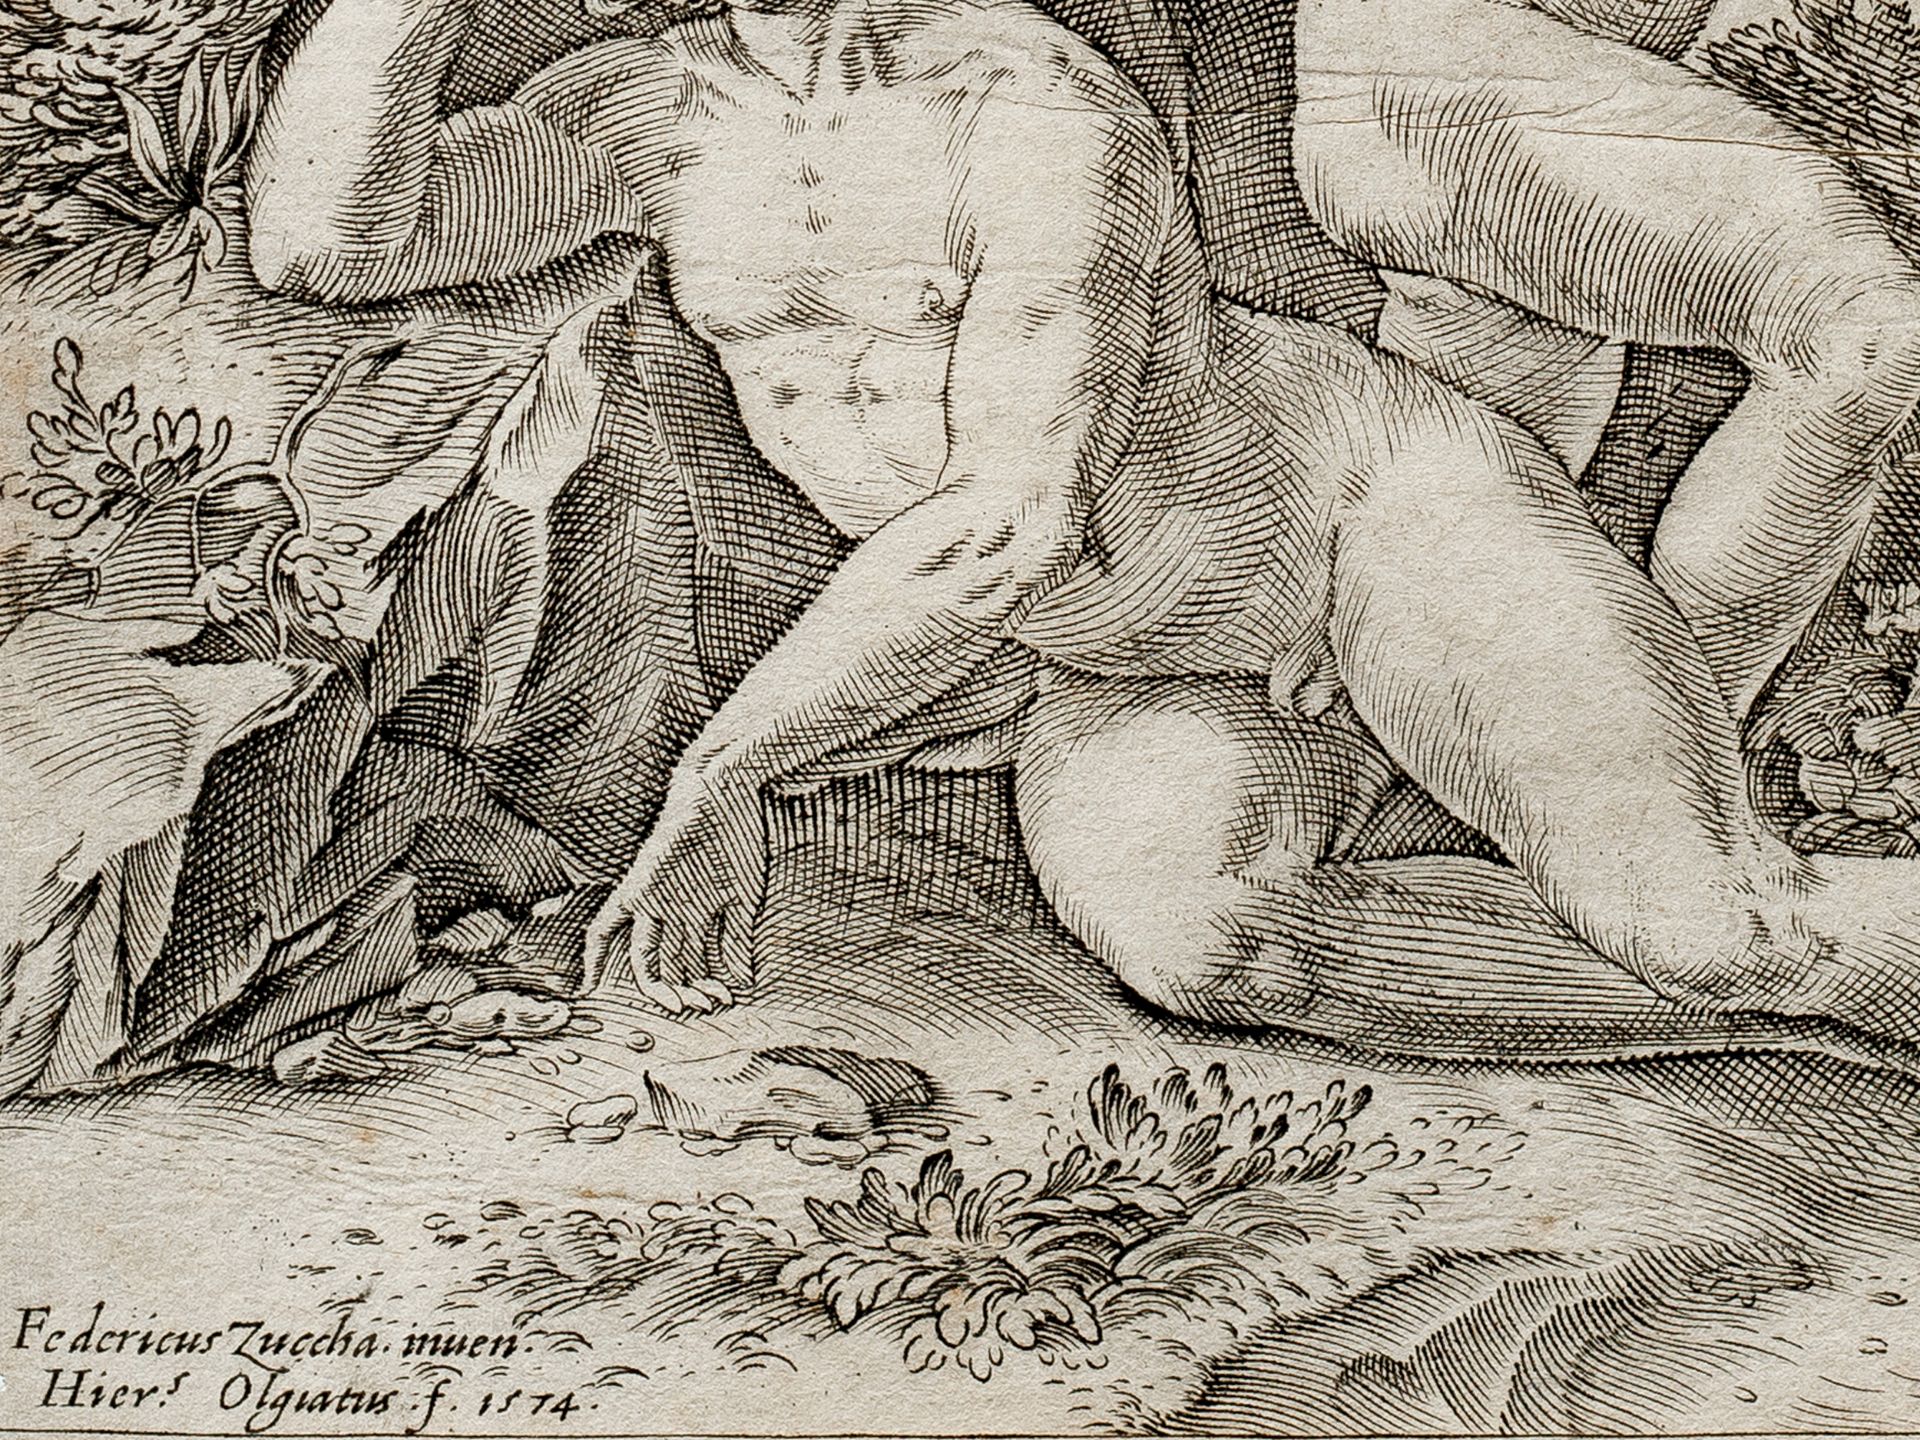 Girolamo Olgiati, Italy, ca. 1567 - 1575, After Federico Zuccari - Image 2 of 3